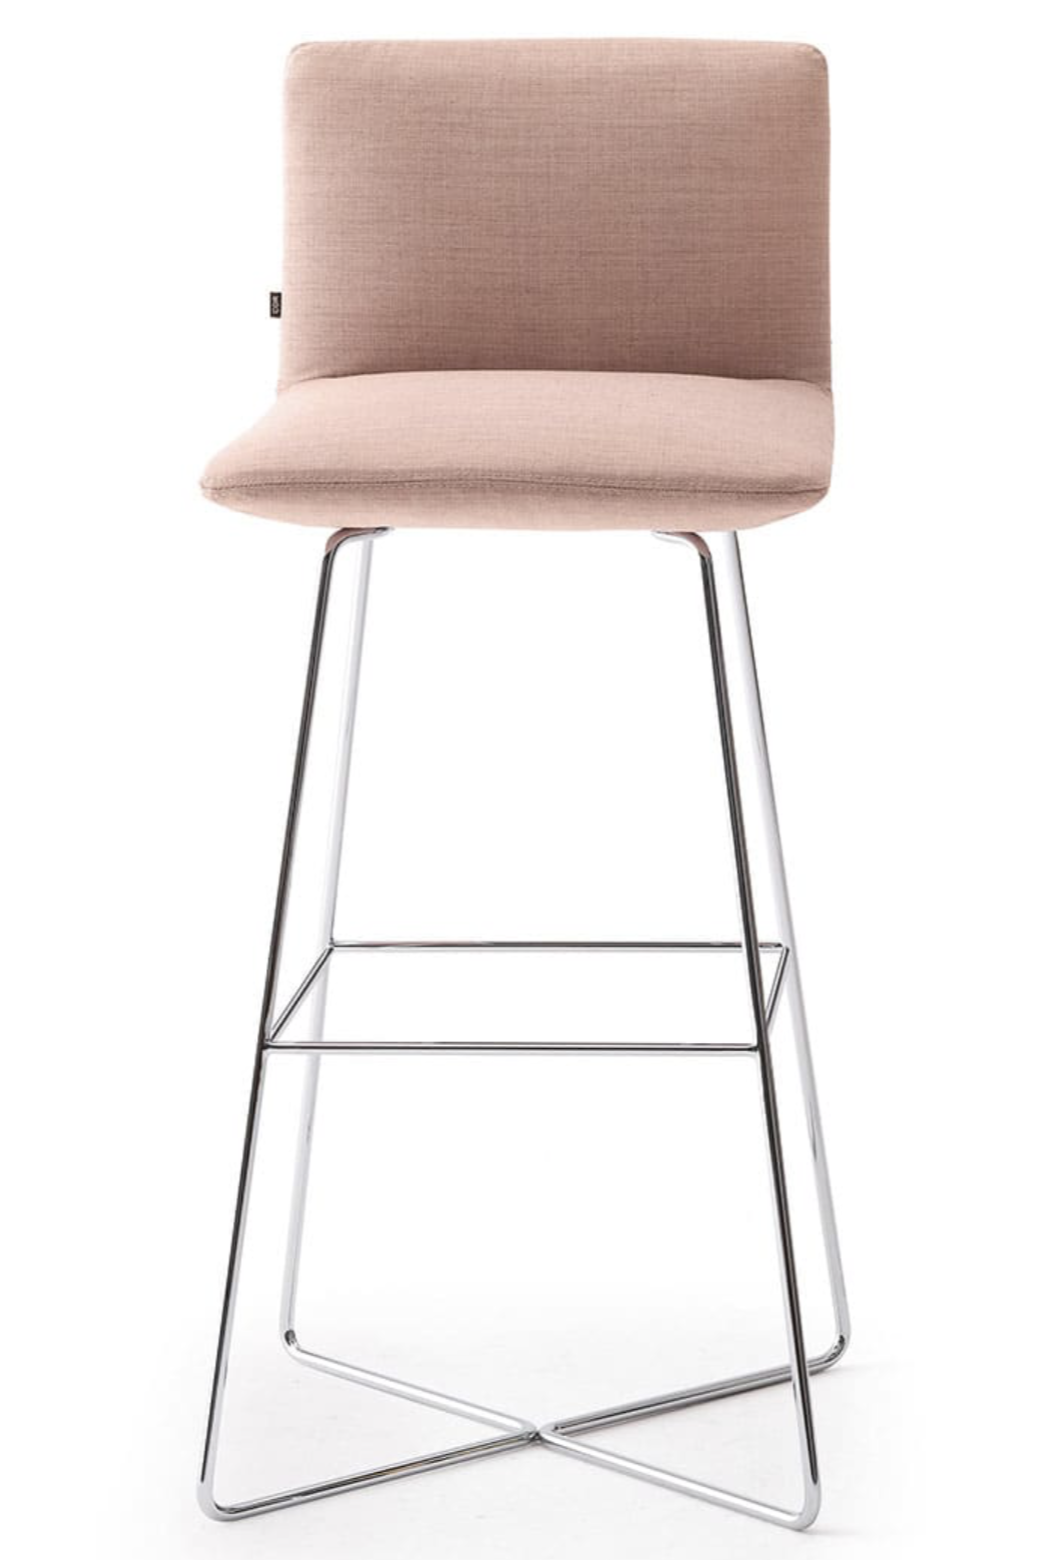 jalis stool cross Product Image